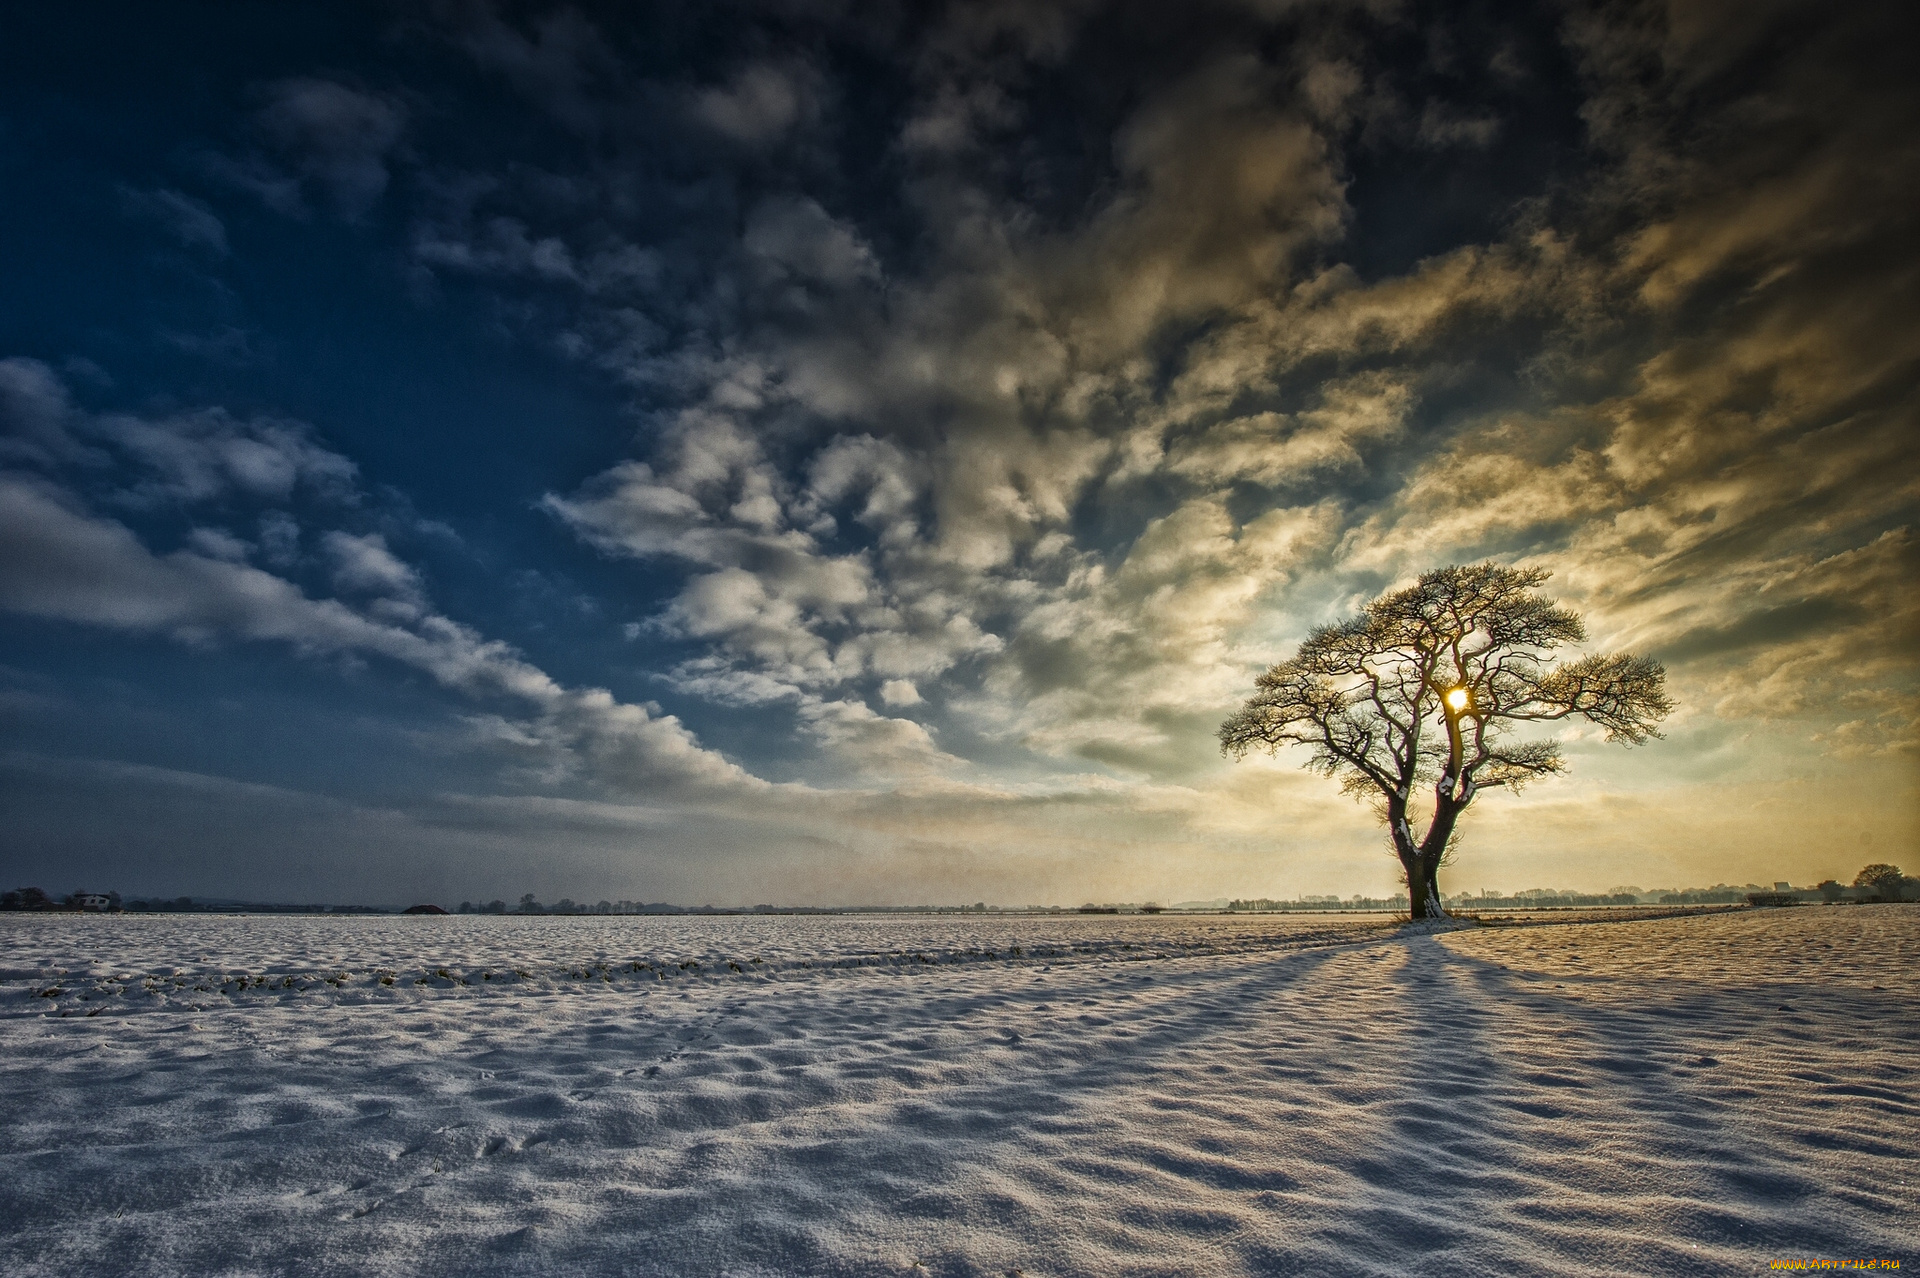 yorkshire, england, природа, зима, йоркшир, англия, снег, дерево, восход, облака